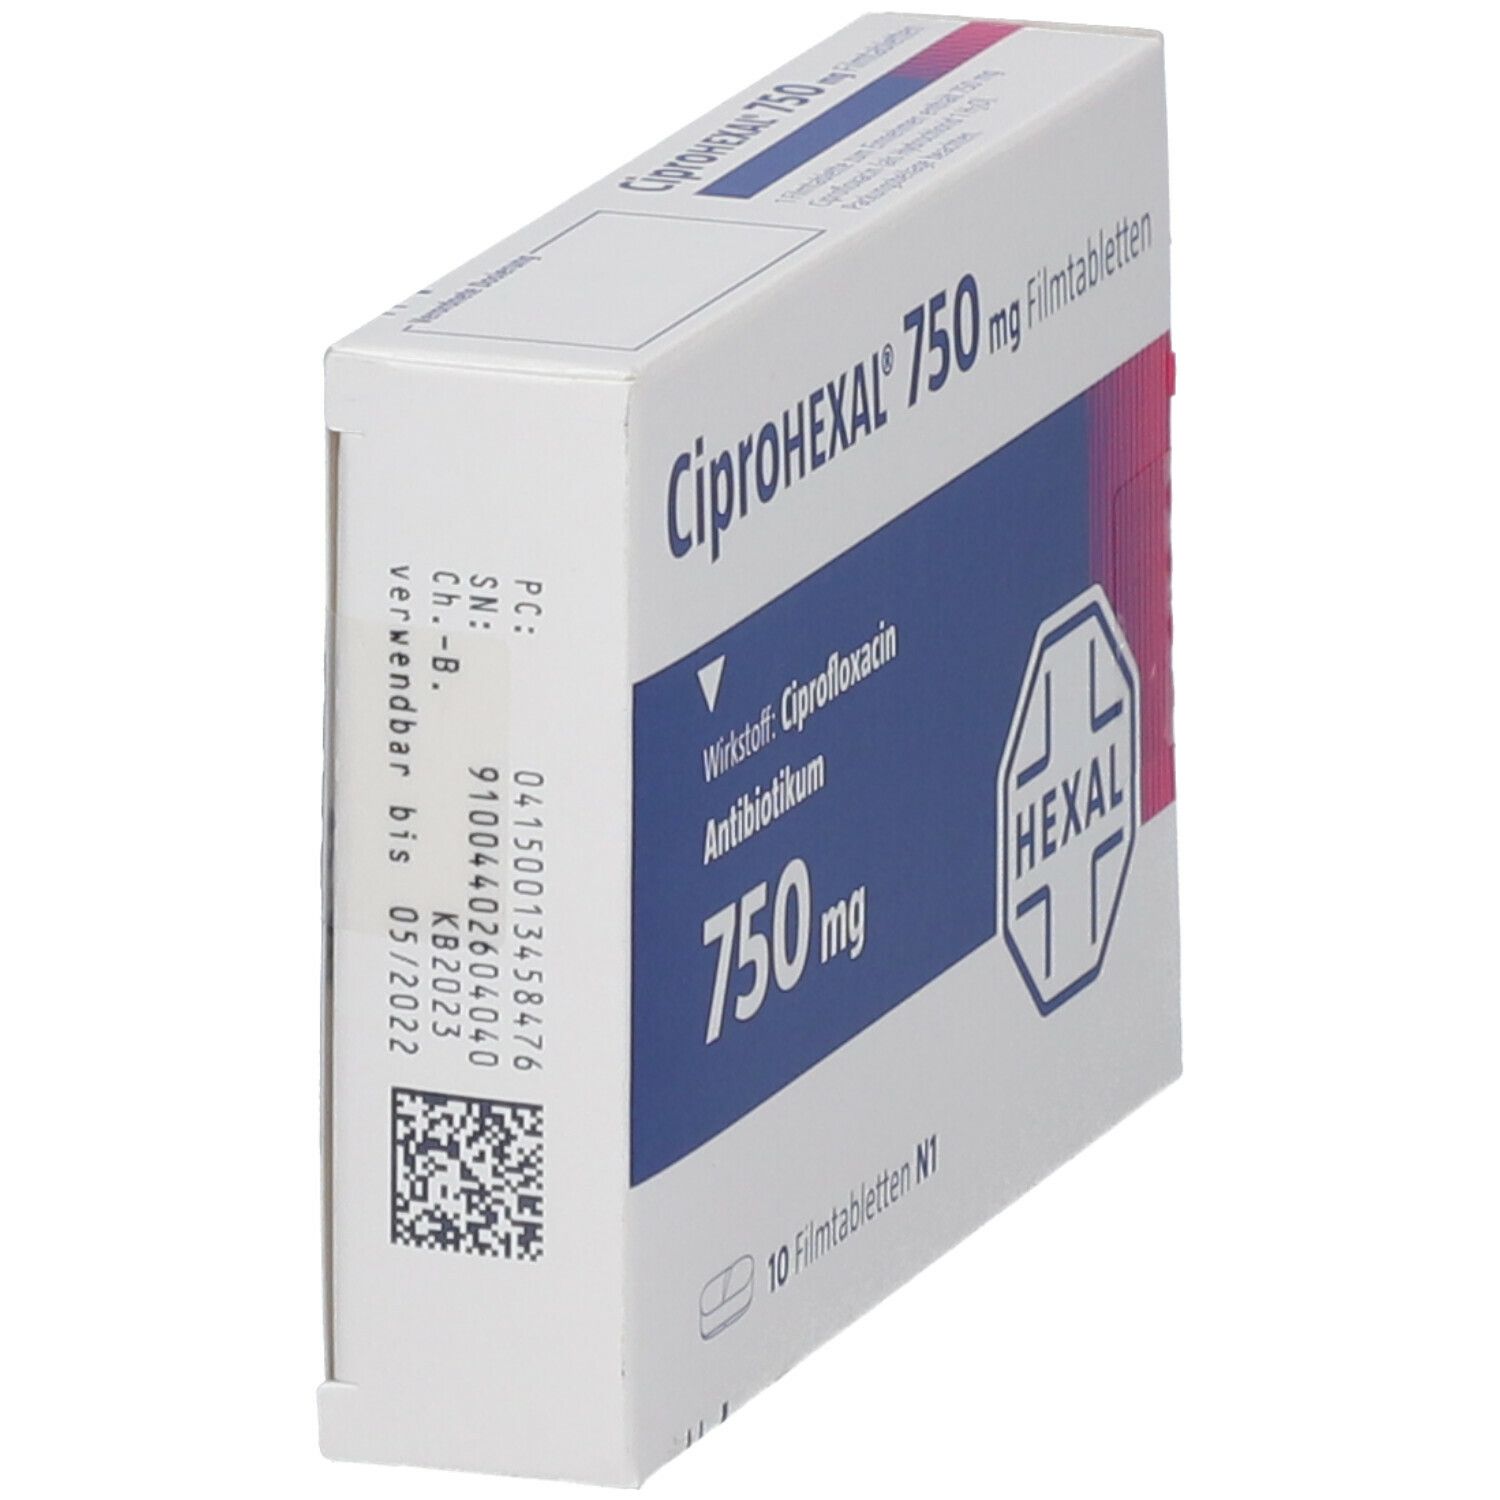 CiproHEXAL® 750 mg